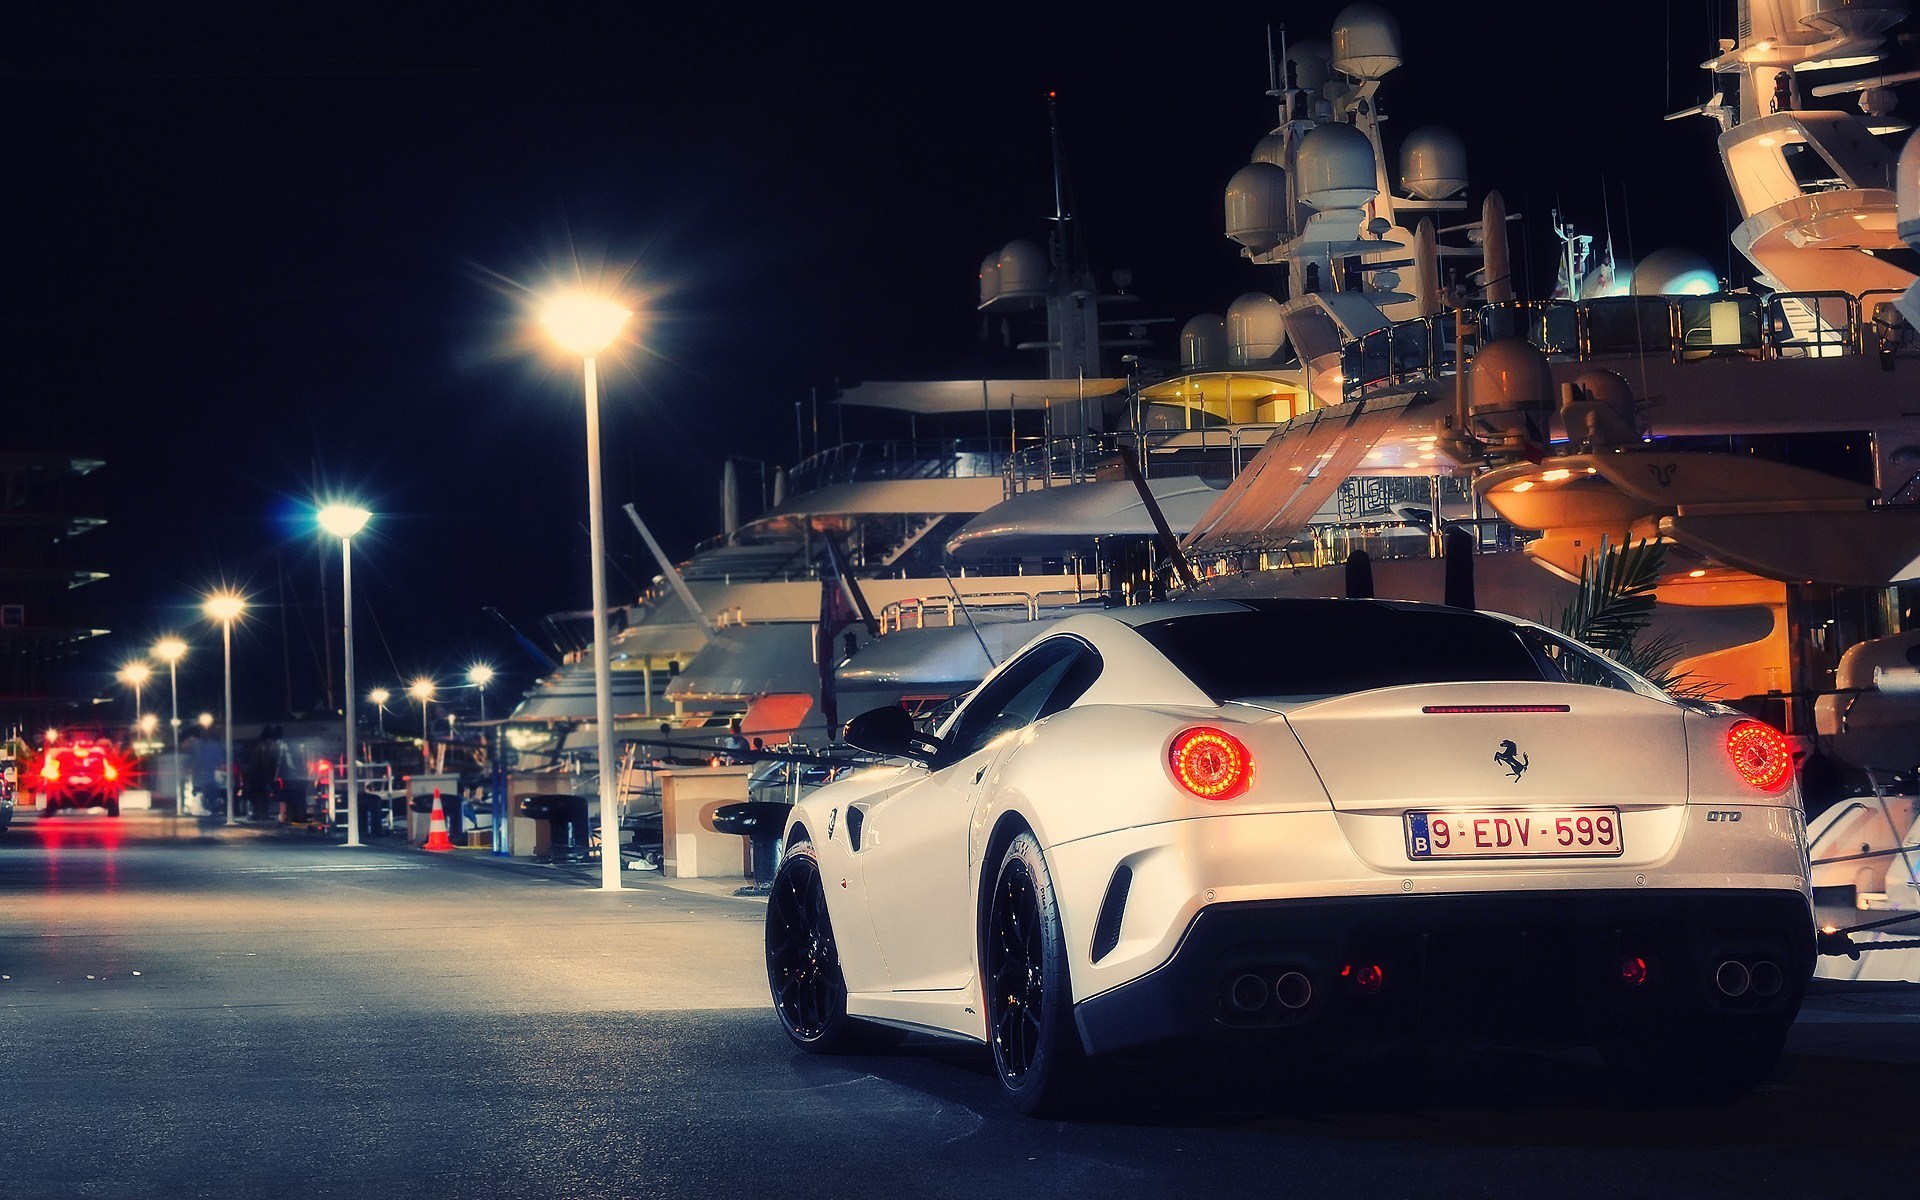 Ferrari 599 GTB Fiorano Night Monaco City Port Yacht Photo